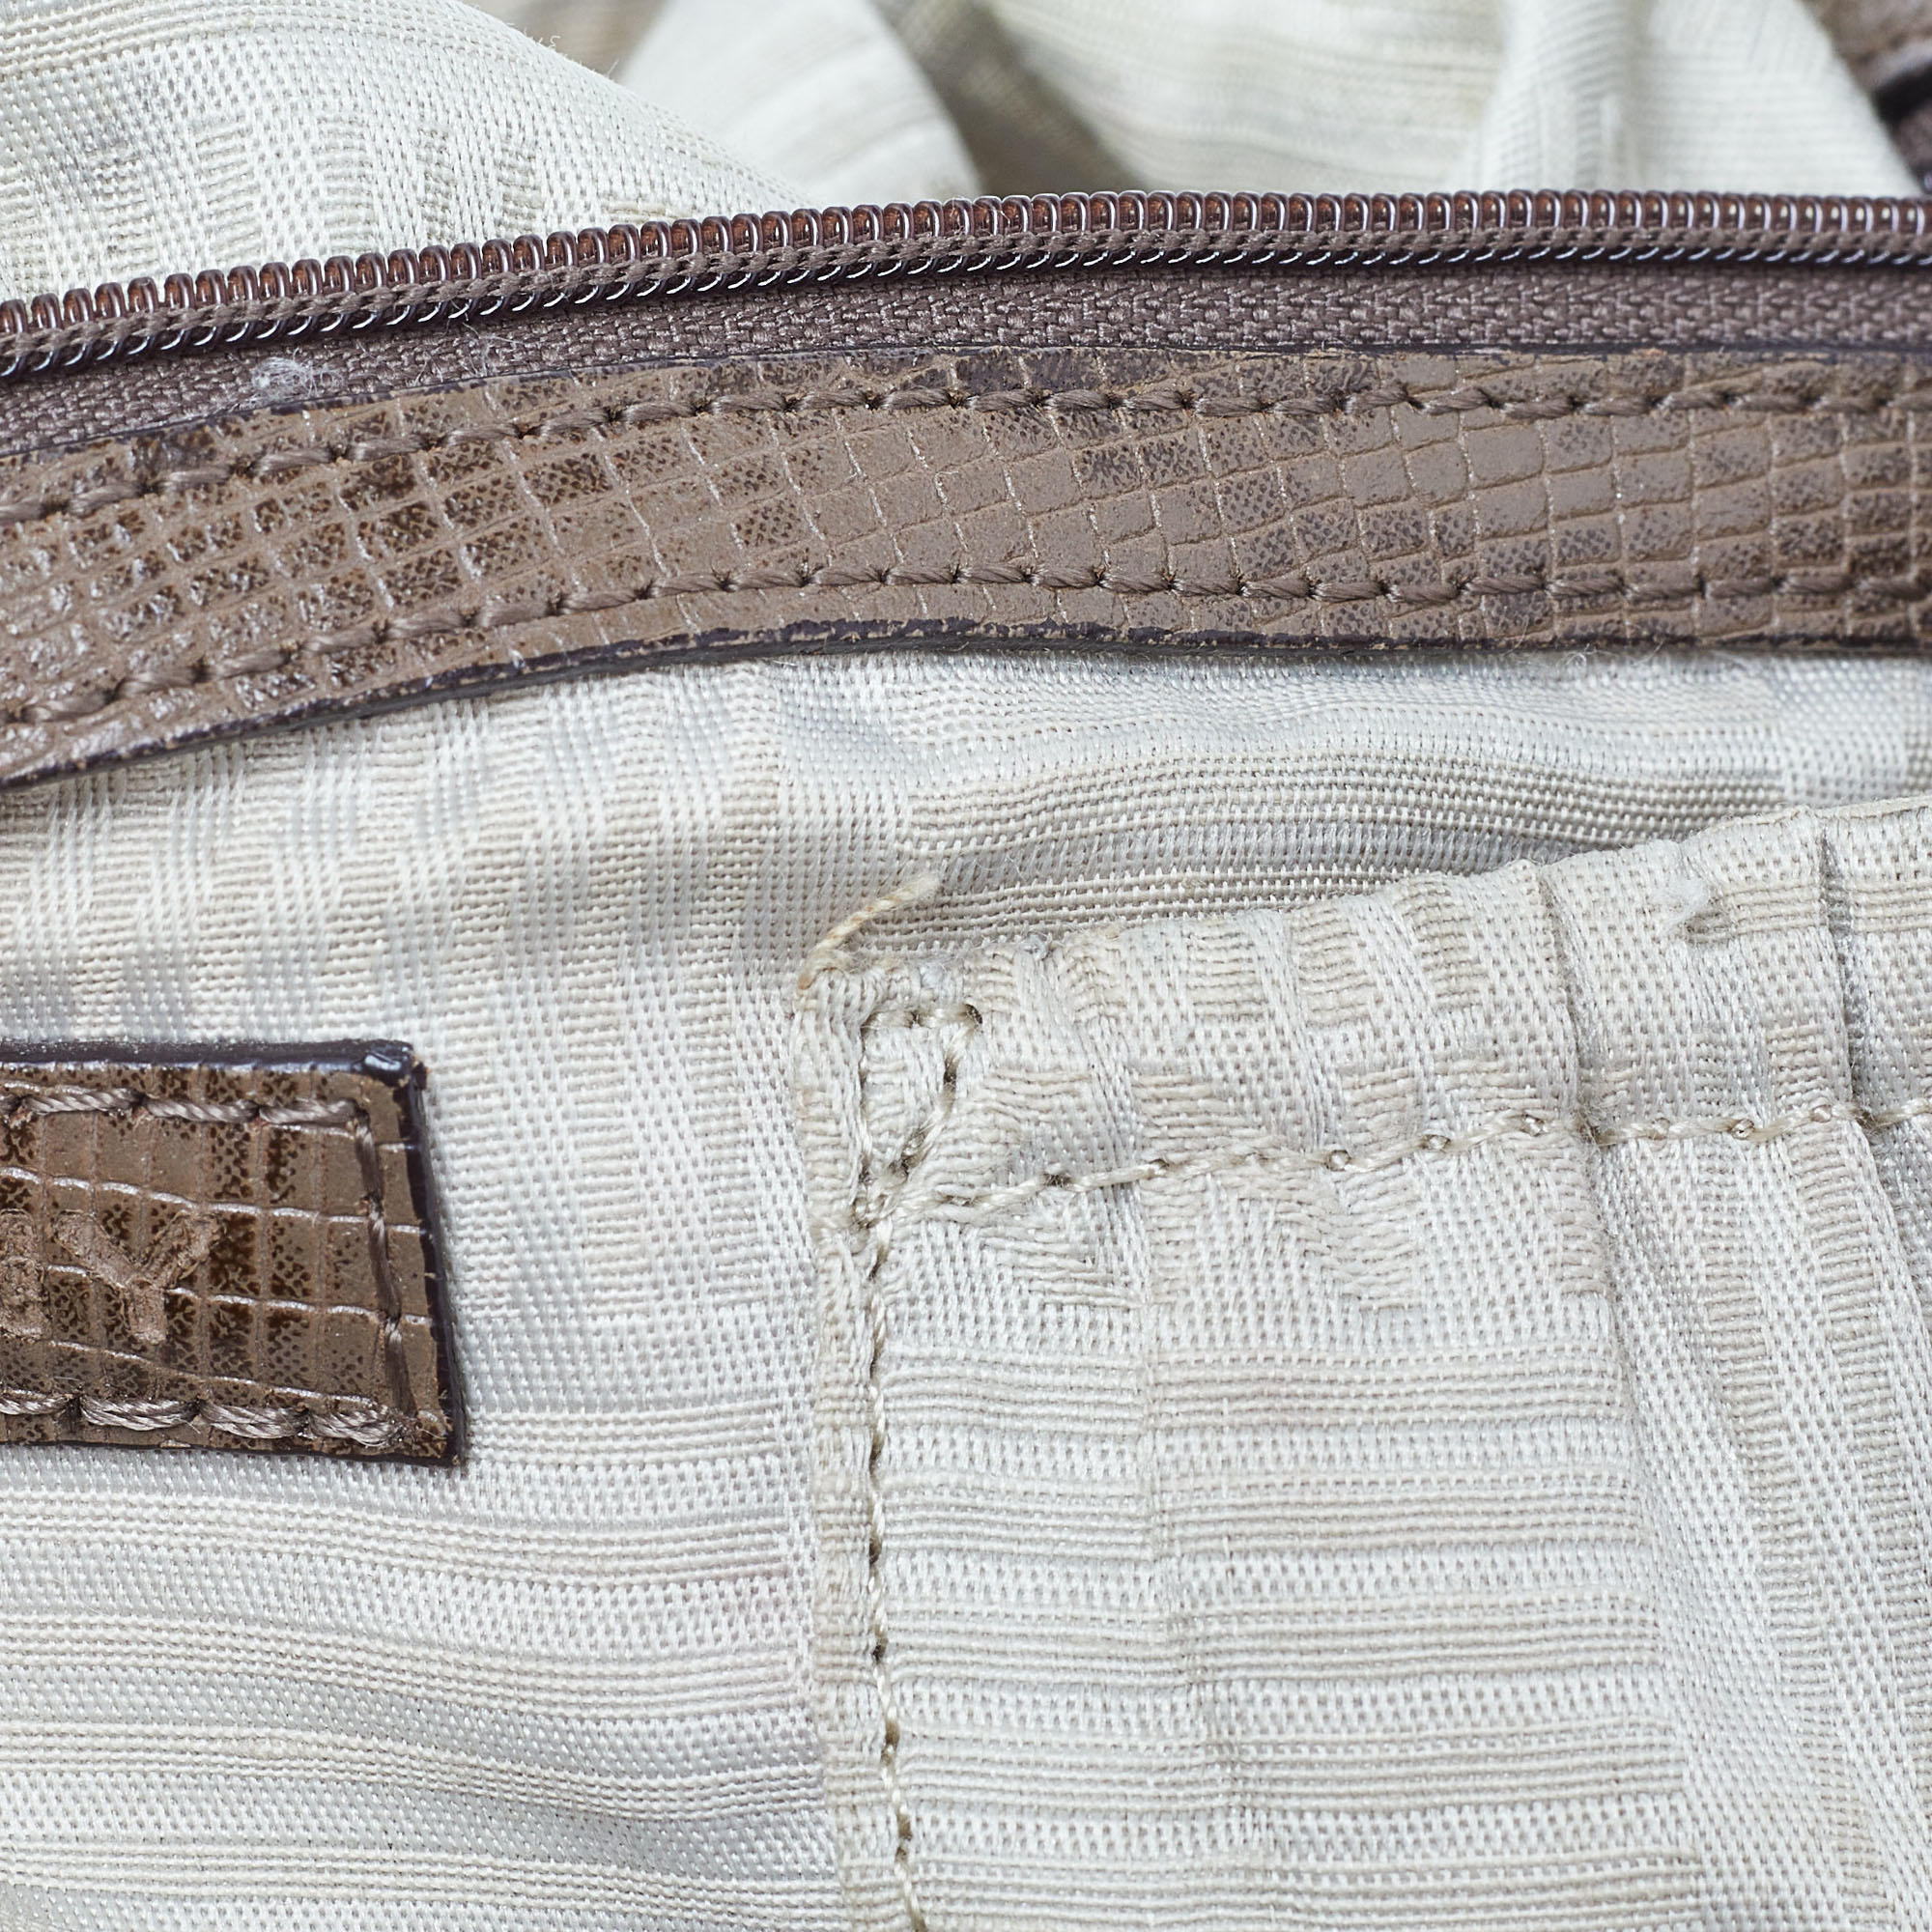 DKNY Beige/Grey Python Embossed Leather Studded Hobo